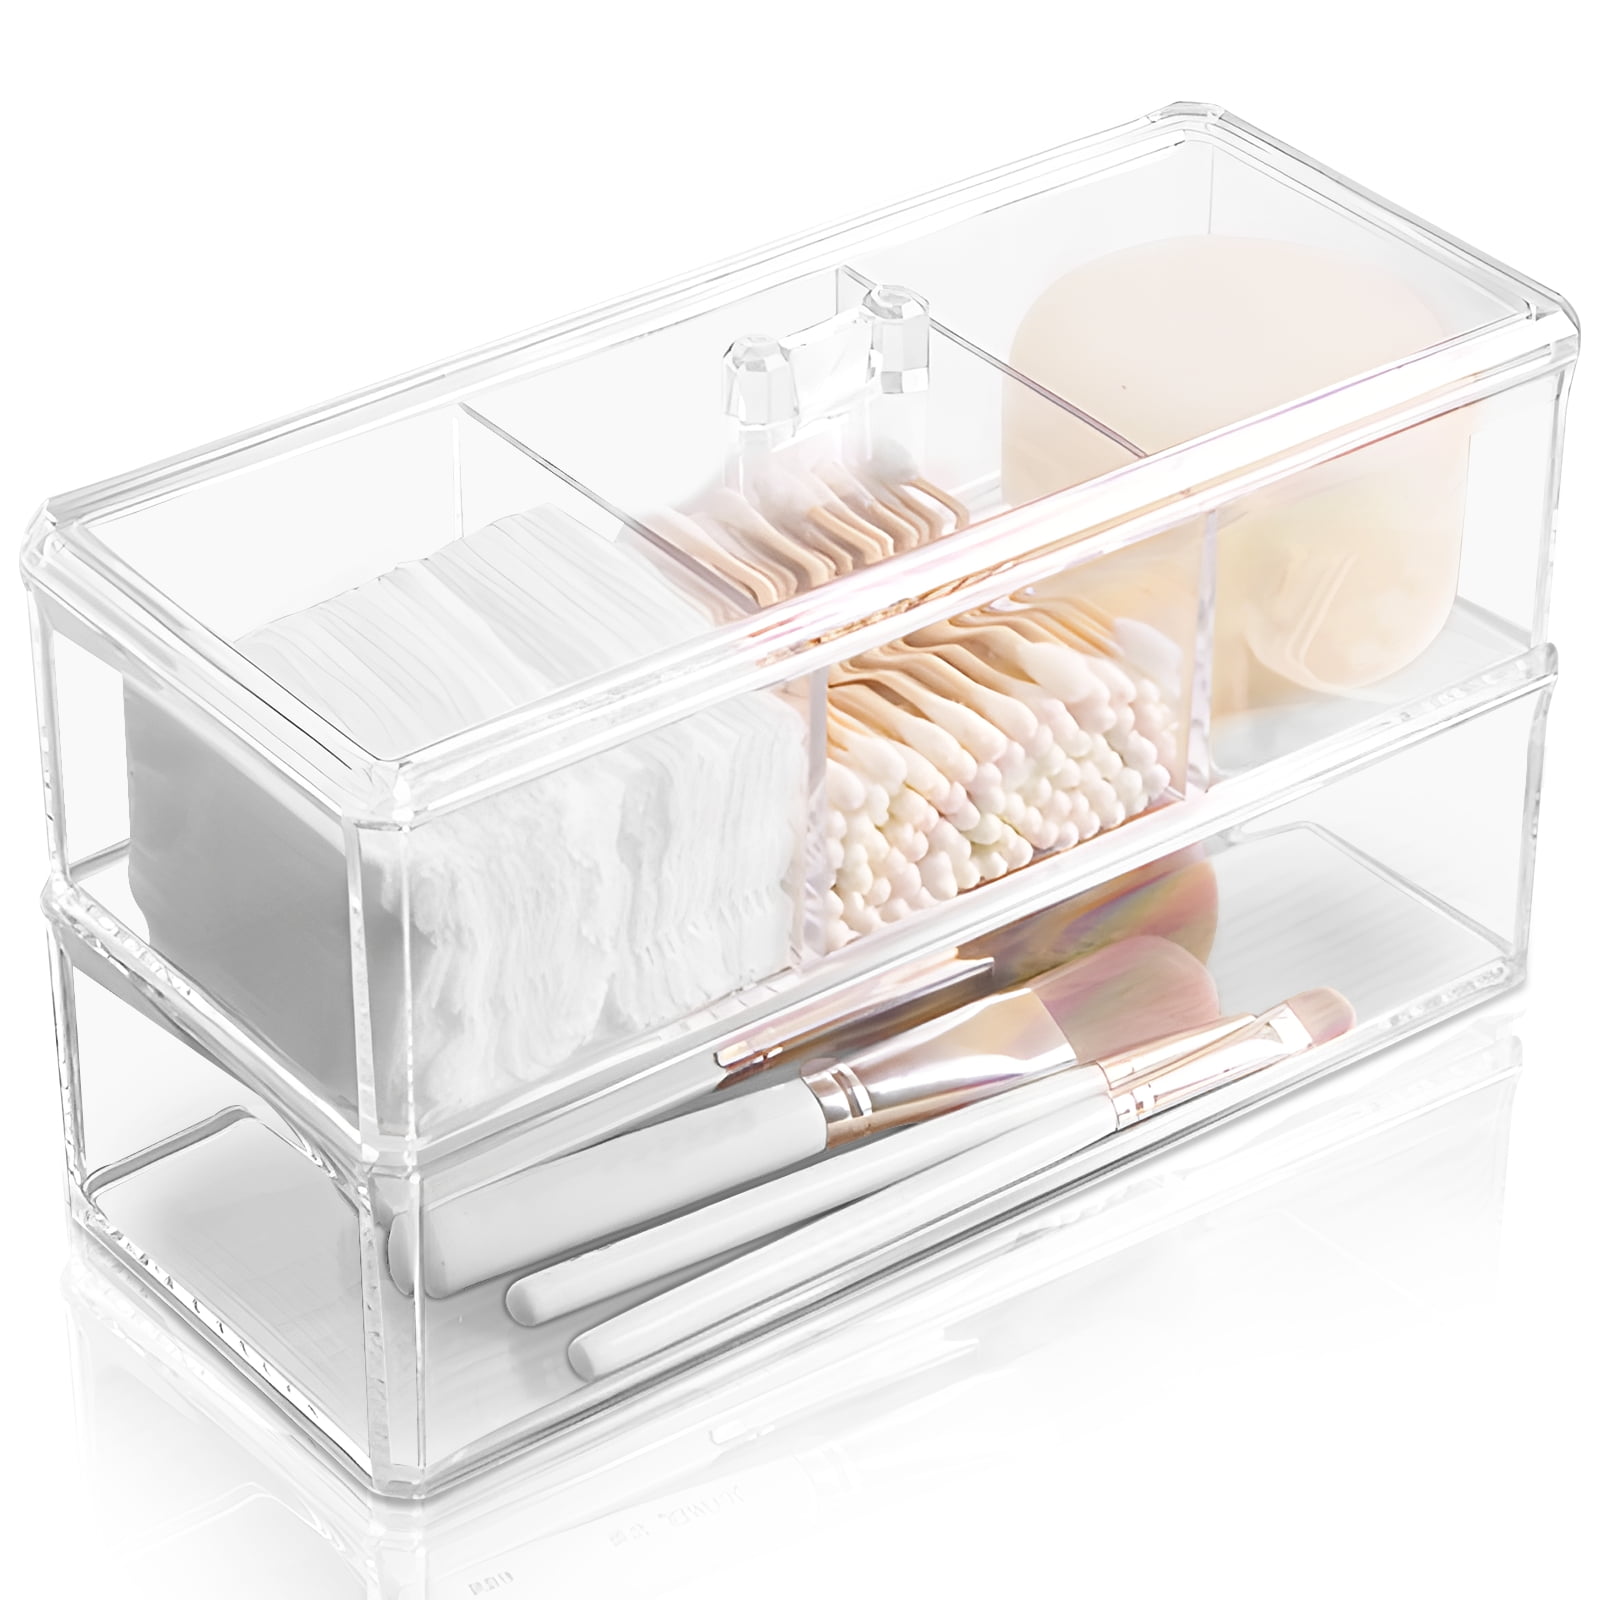 EEEkit 3 Grids Qtips Holder, Cotton Swabs Dispenser Storage Box, Makeup Accessory Organizer, White, Size: 8.3*3*3.5 (Large*W*H)